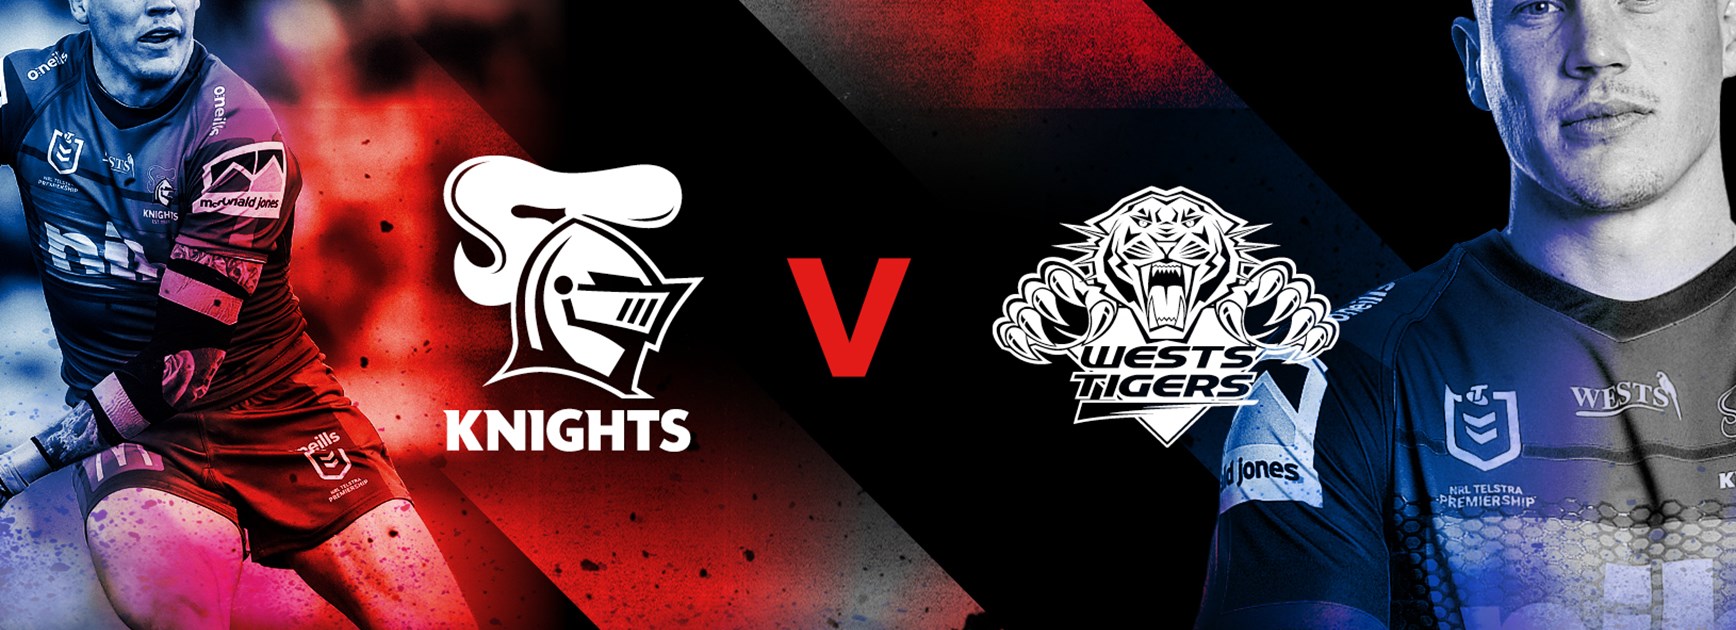 Knights v Tigers Round 13 NRL team list